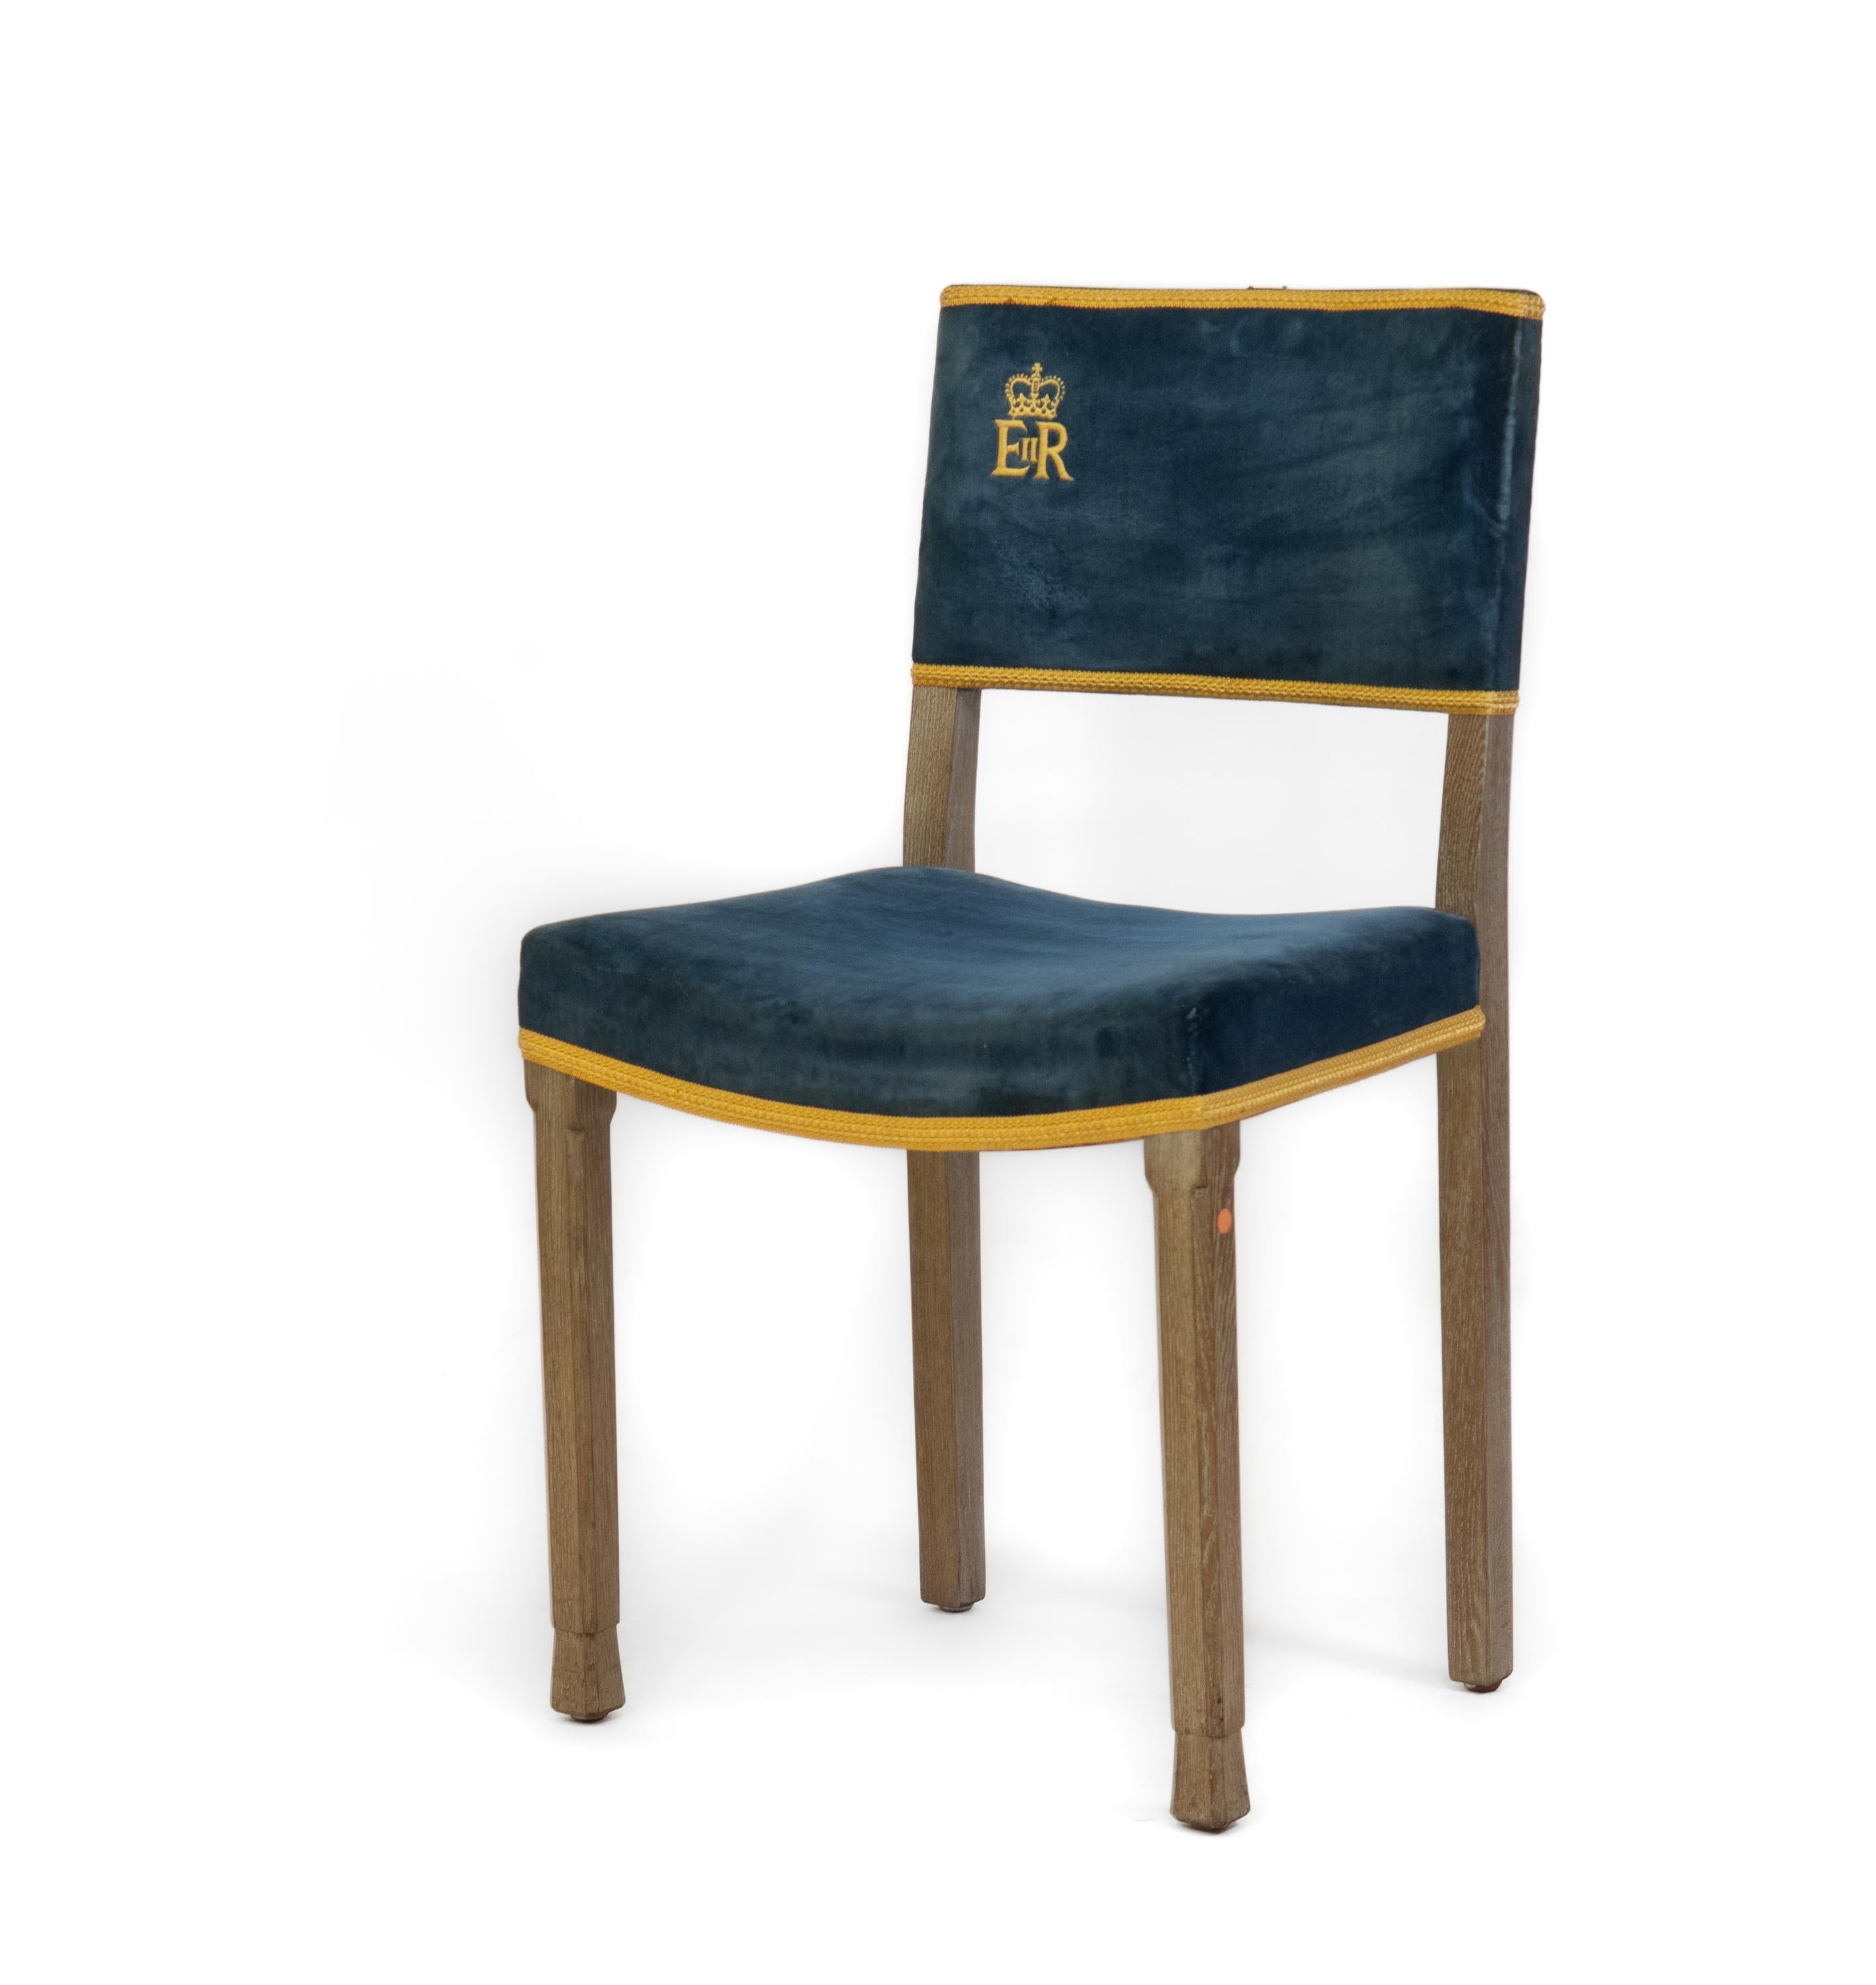 English Original Queen Elizabeth II Coronation Chair 1953 Excellent Example